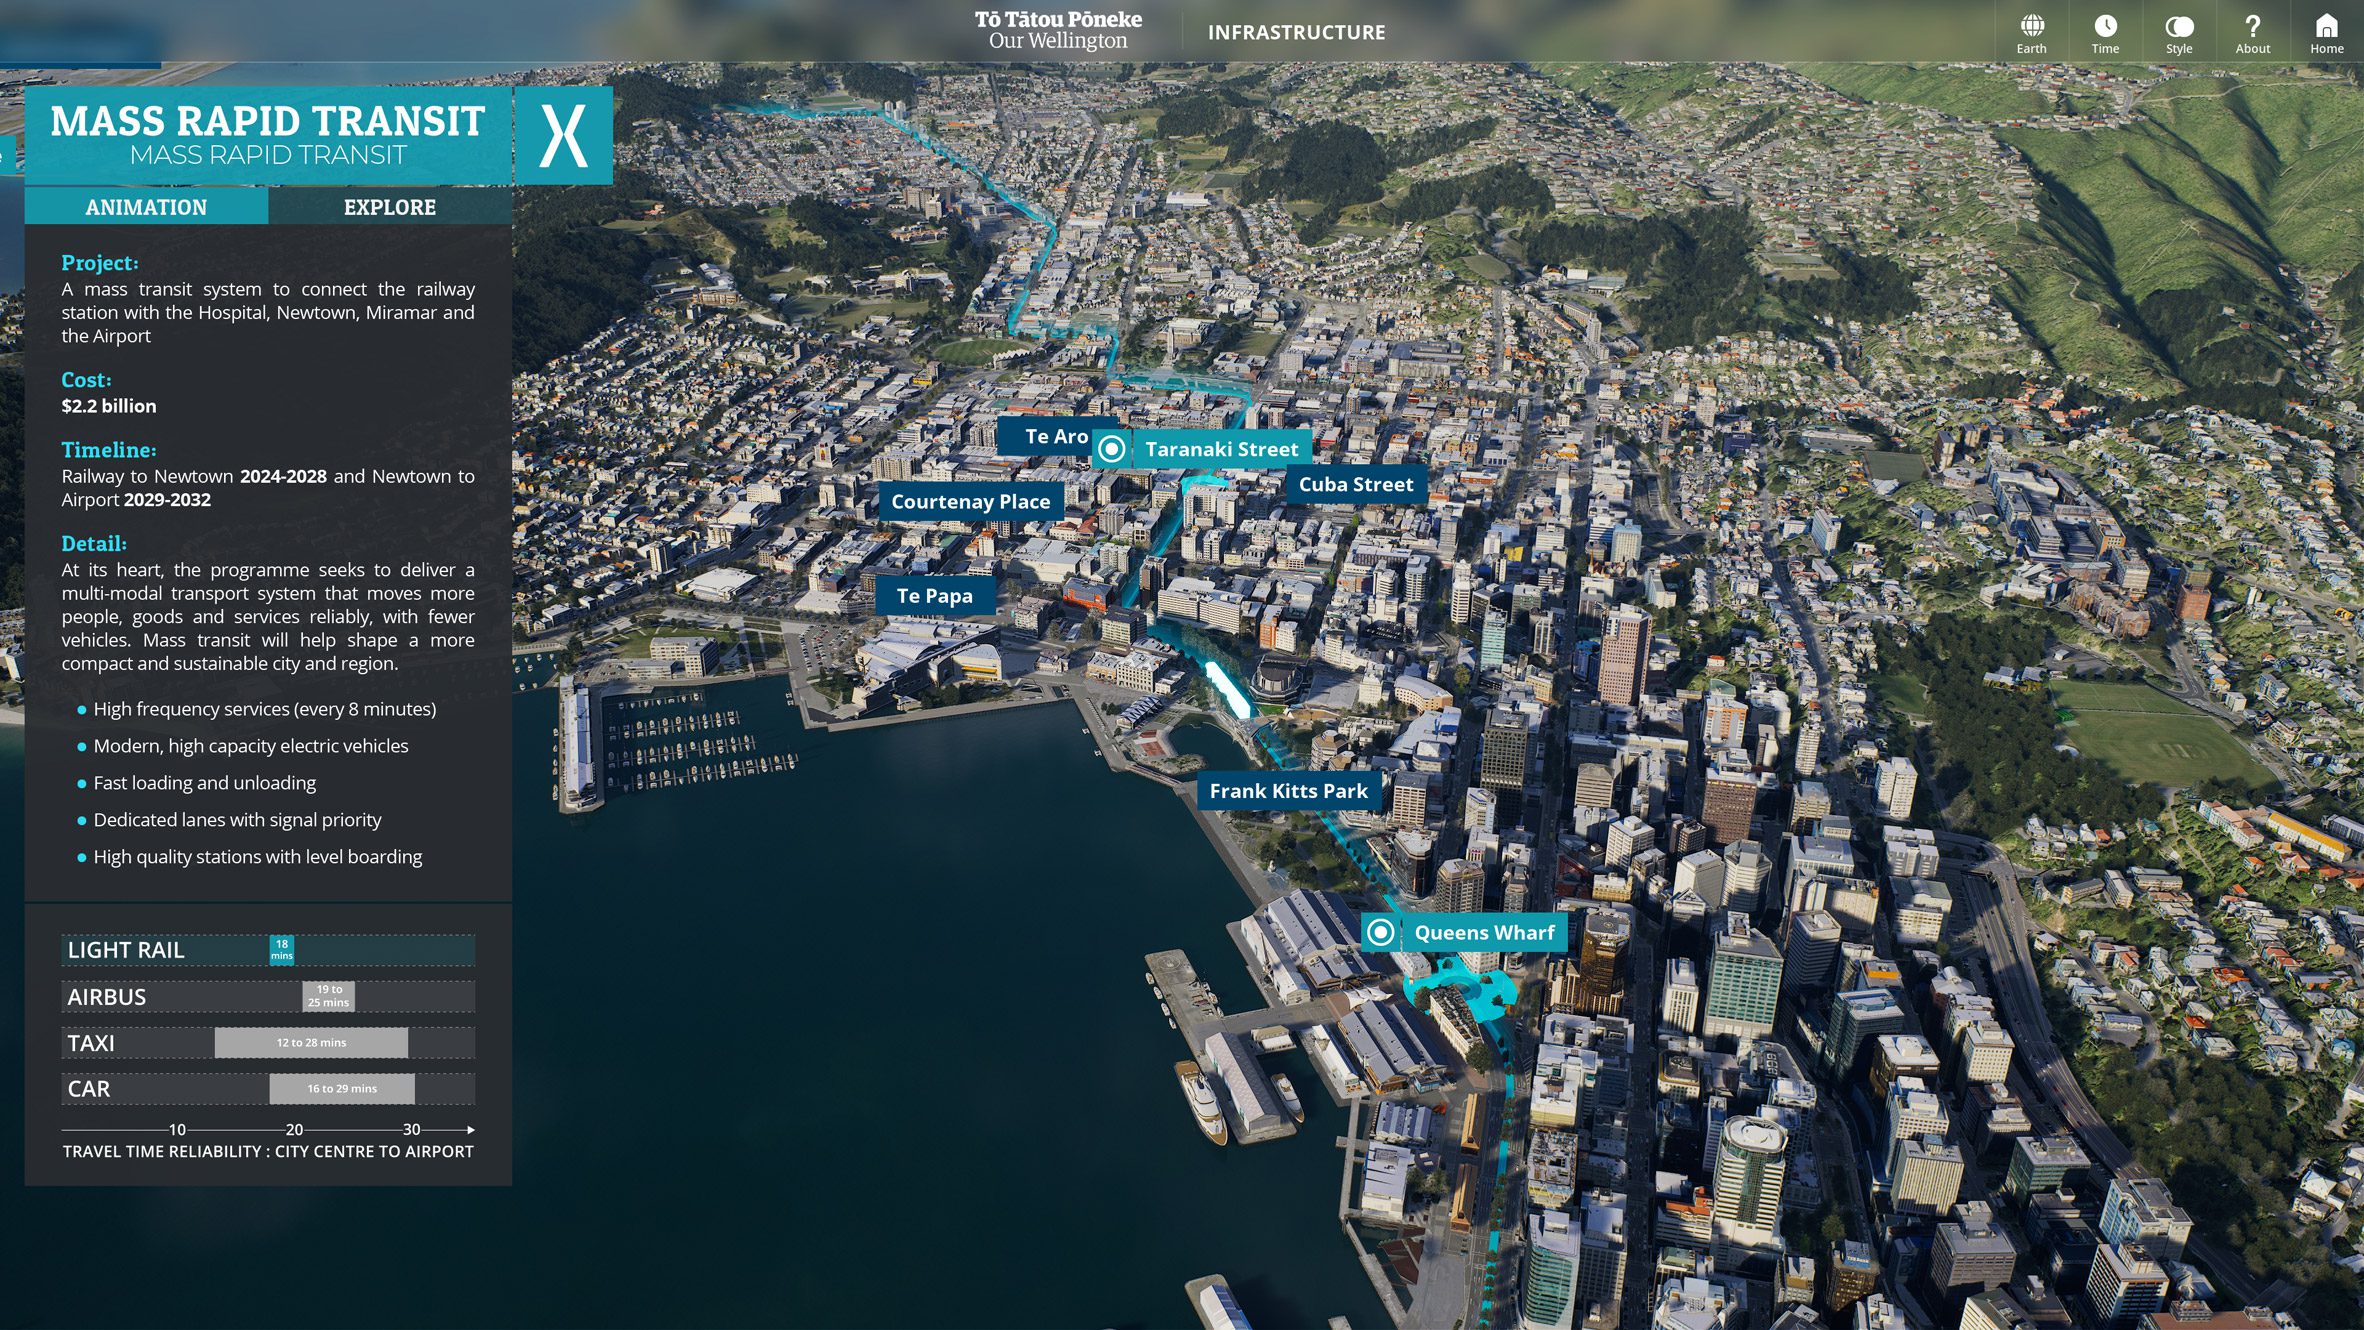 Mass rapid transit 3D model for Wellington by Buildmedia